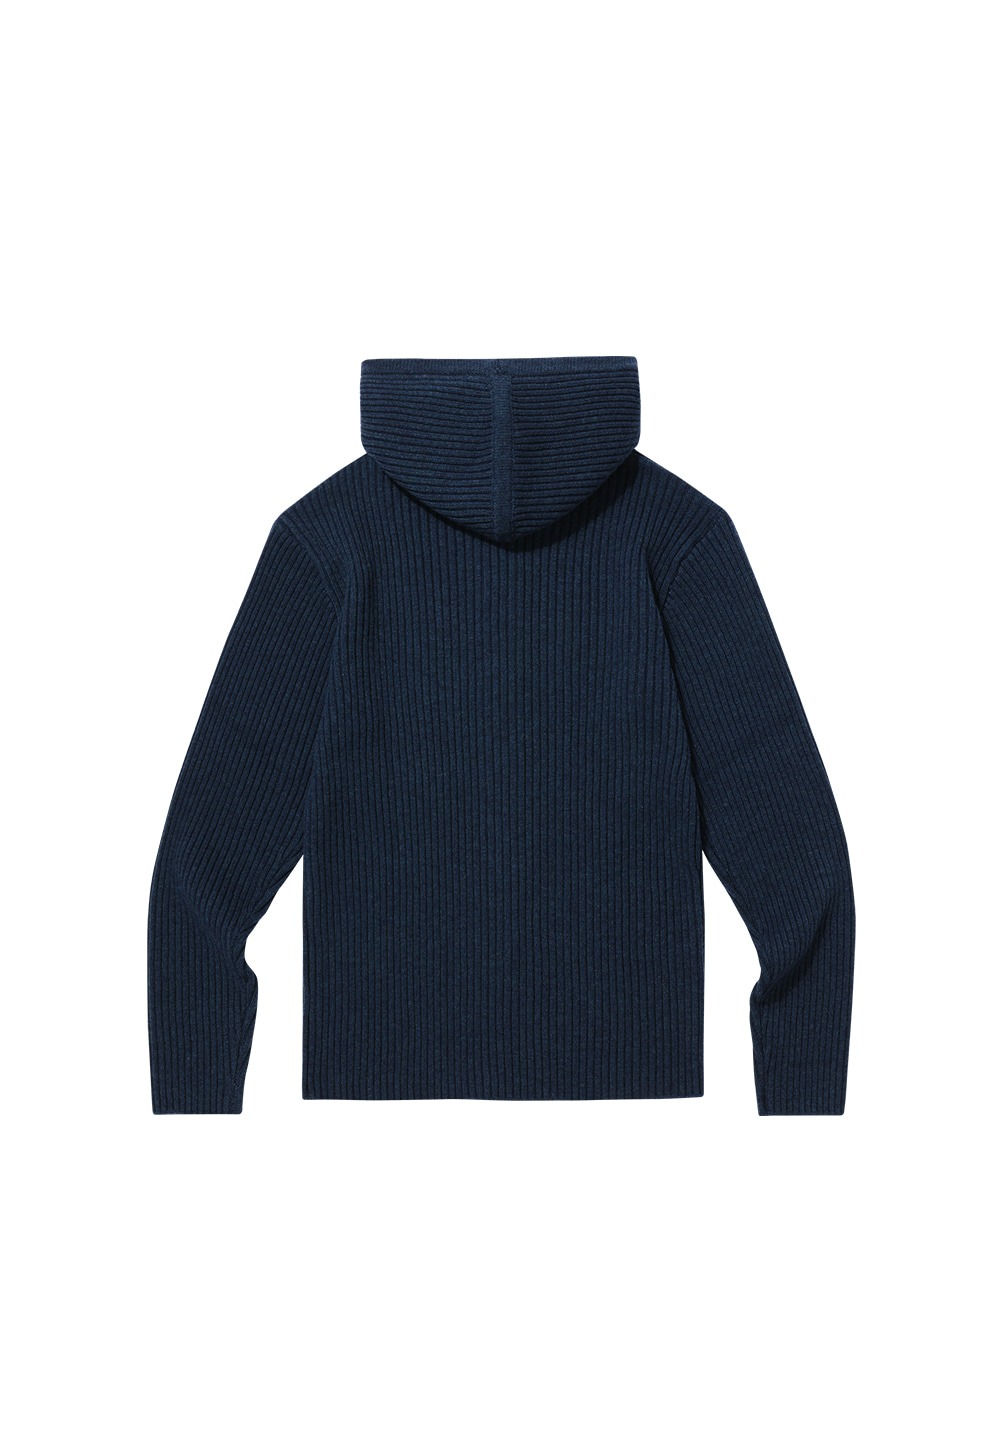 Signature hood knit zip-up - NAVY